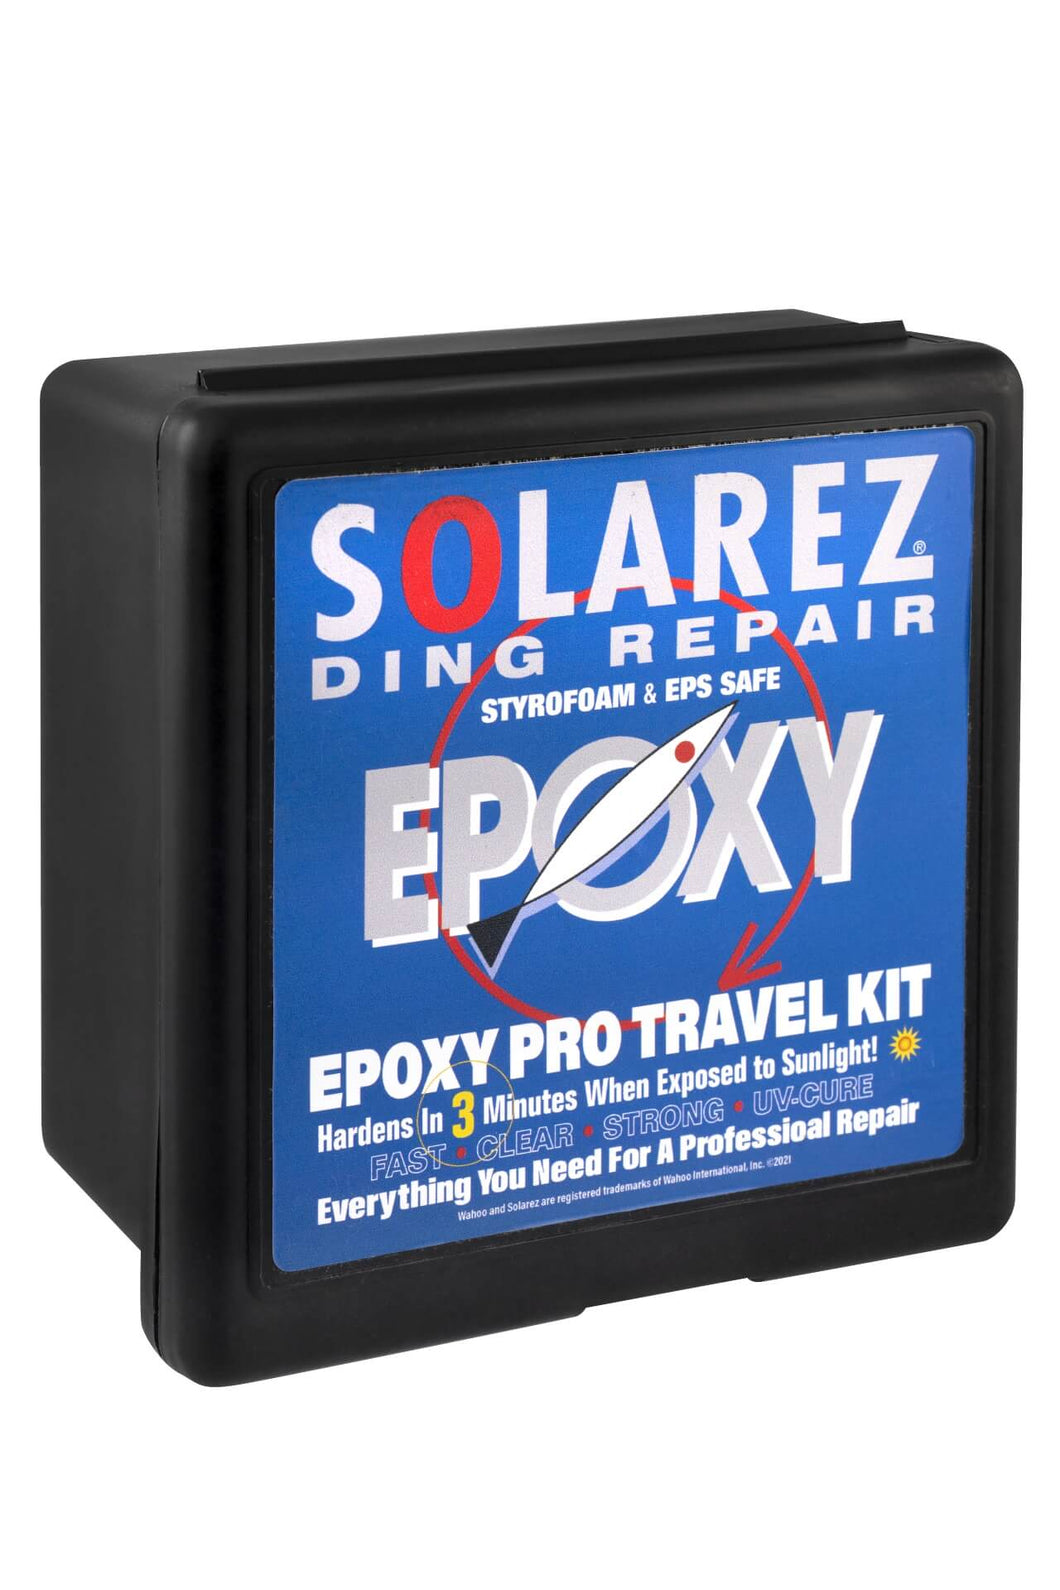 Solarez Ding Repair Epoxy Pro Travel Kit sku:72050009